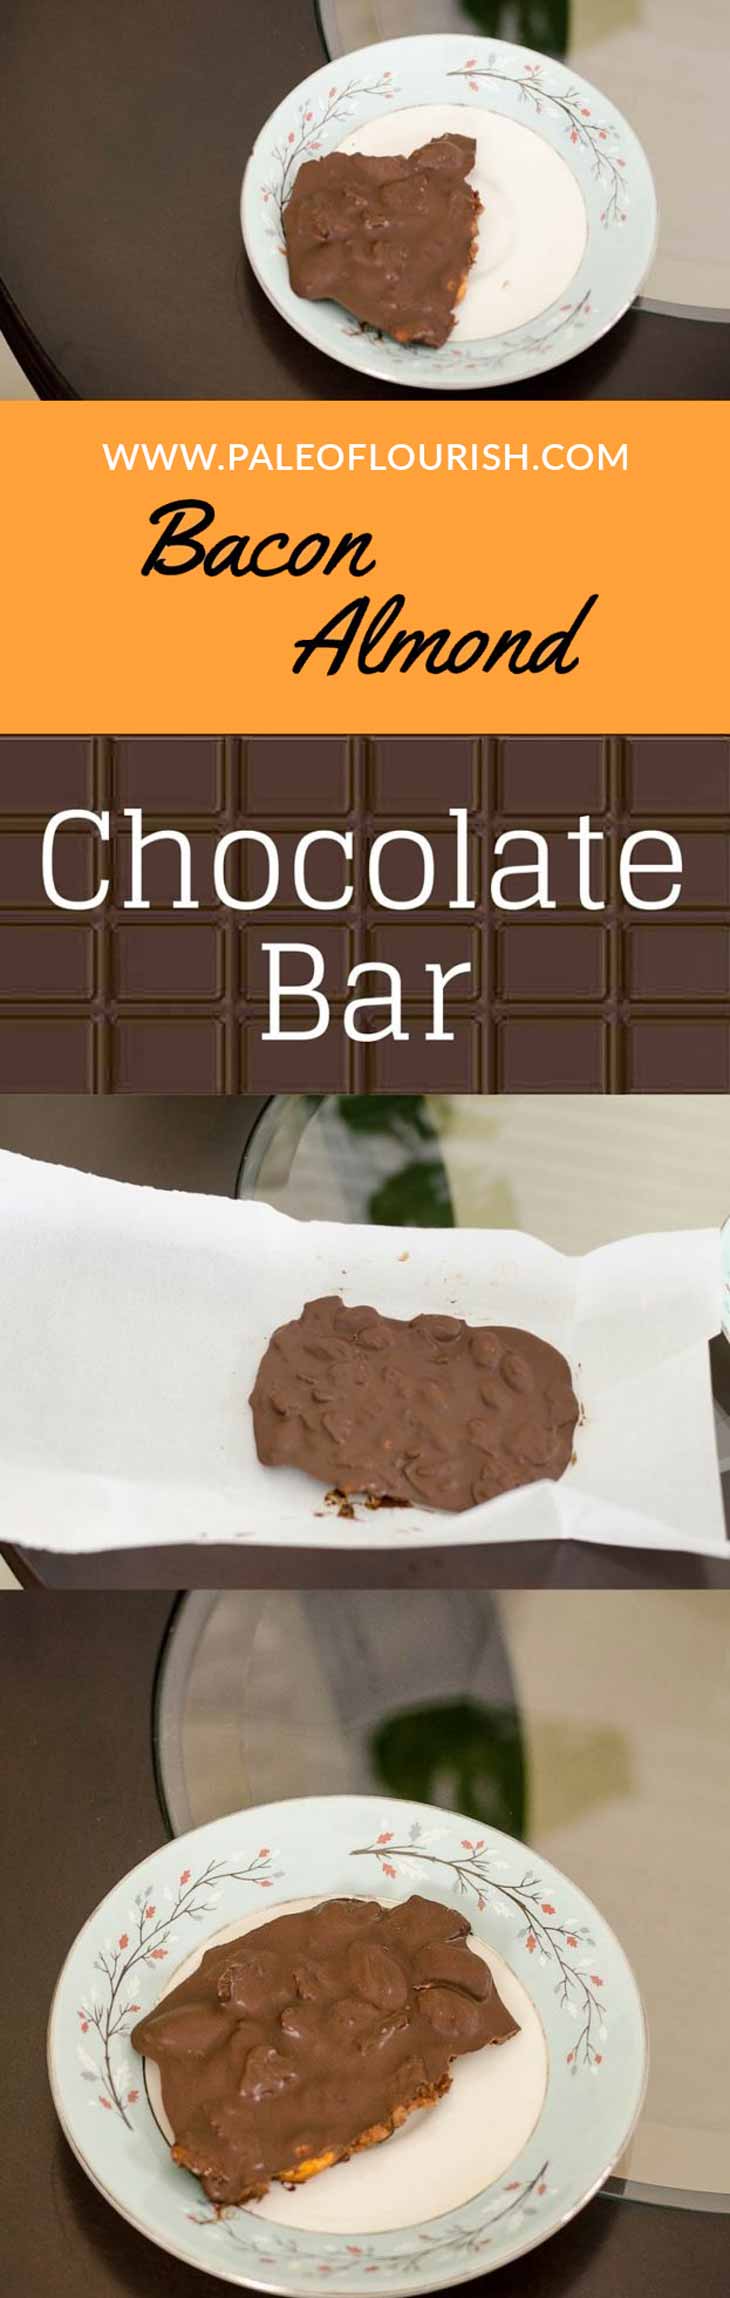 Bacon Almond Chocolate Bar Recipe [Paleo, Gluten-Free, Dairy-Free]